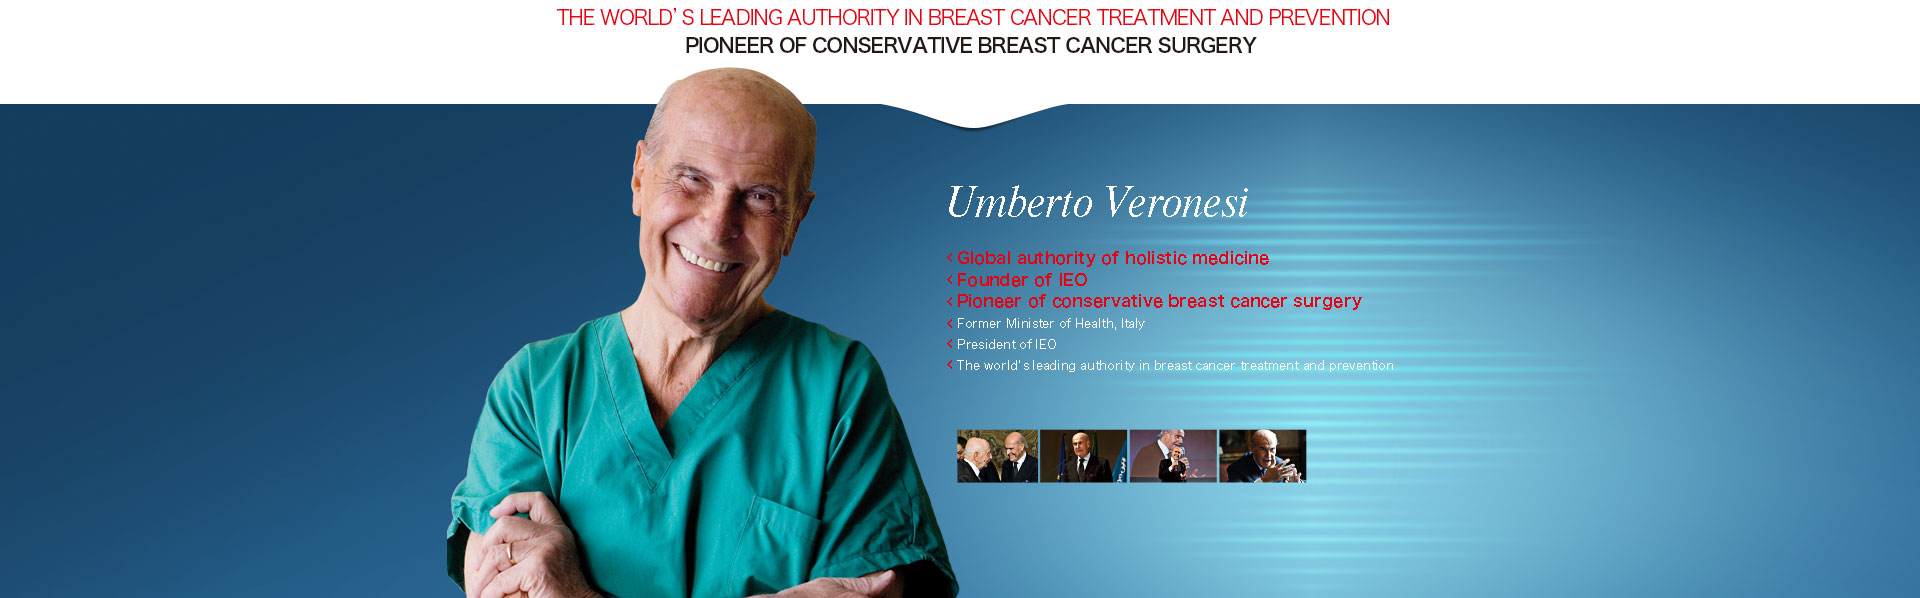 veronesi-conservative breast cancer surgery